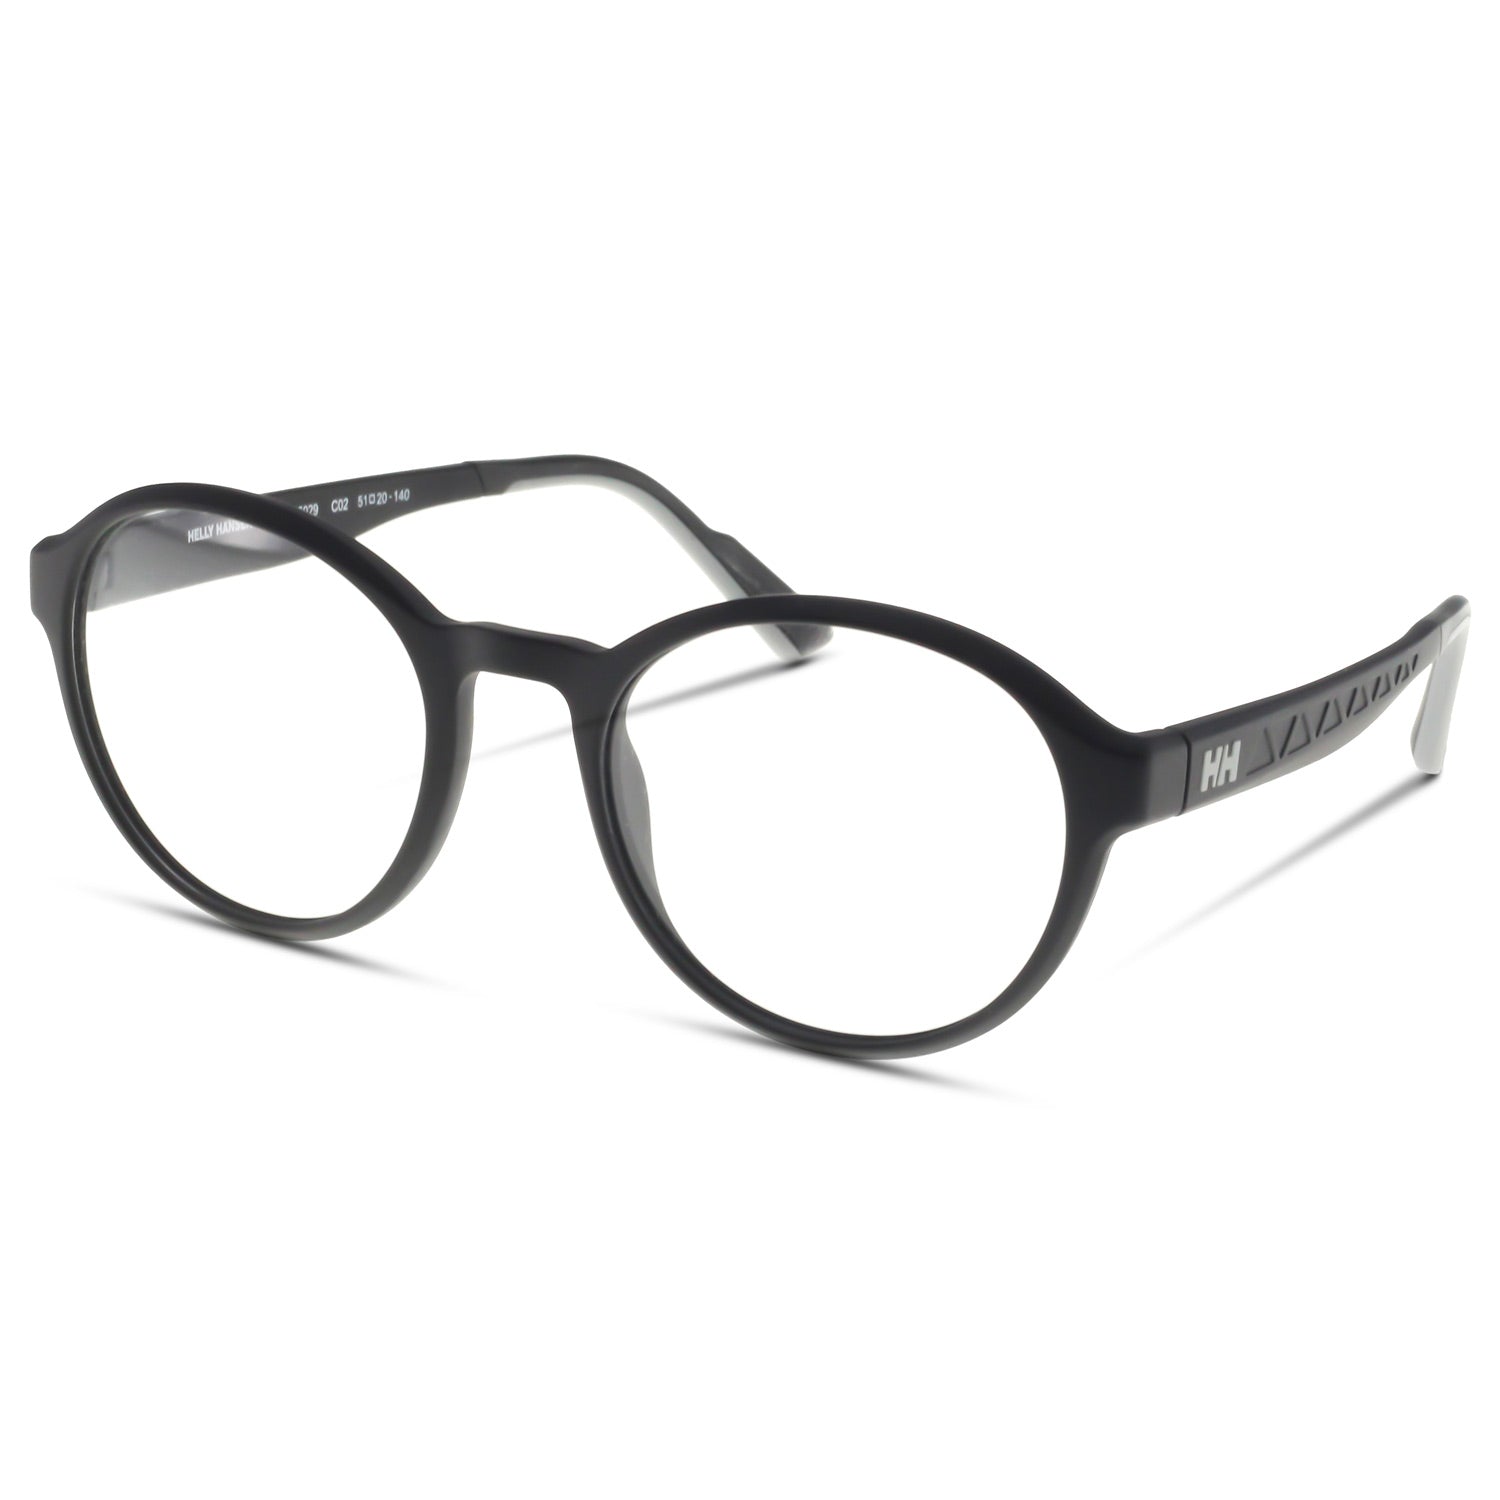 Helly Hansen Frames Helly Hansen Glasses Optical Frame HH1063 C02 51 Eyeglasses Eyewear UK USA Australia 